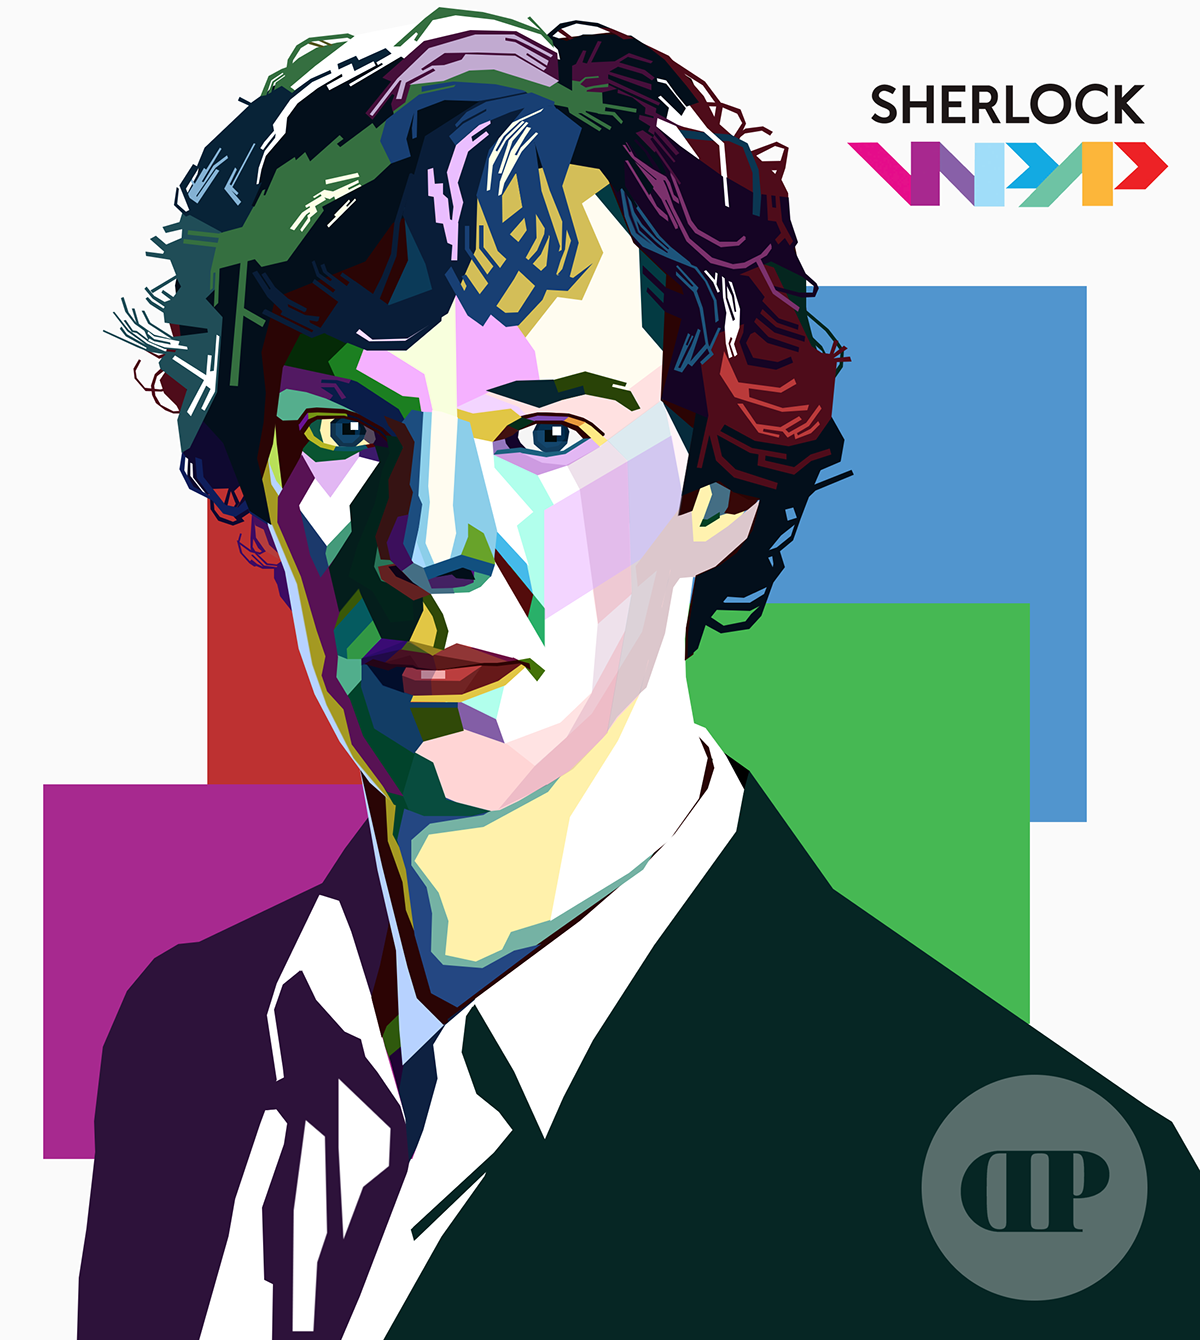 Sherlock WPAP art